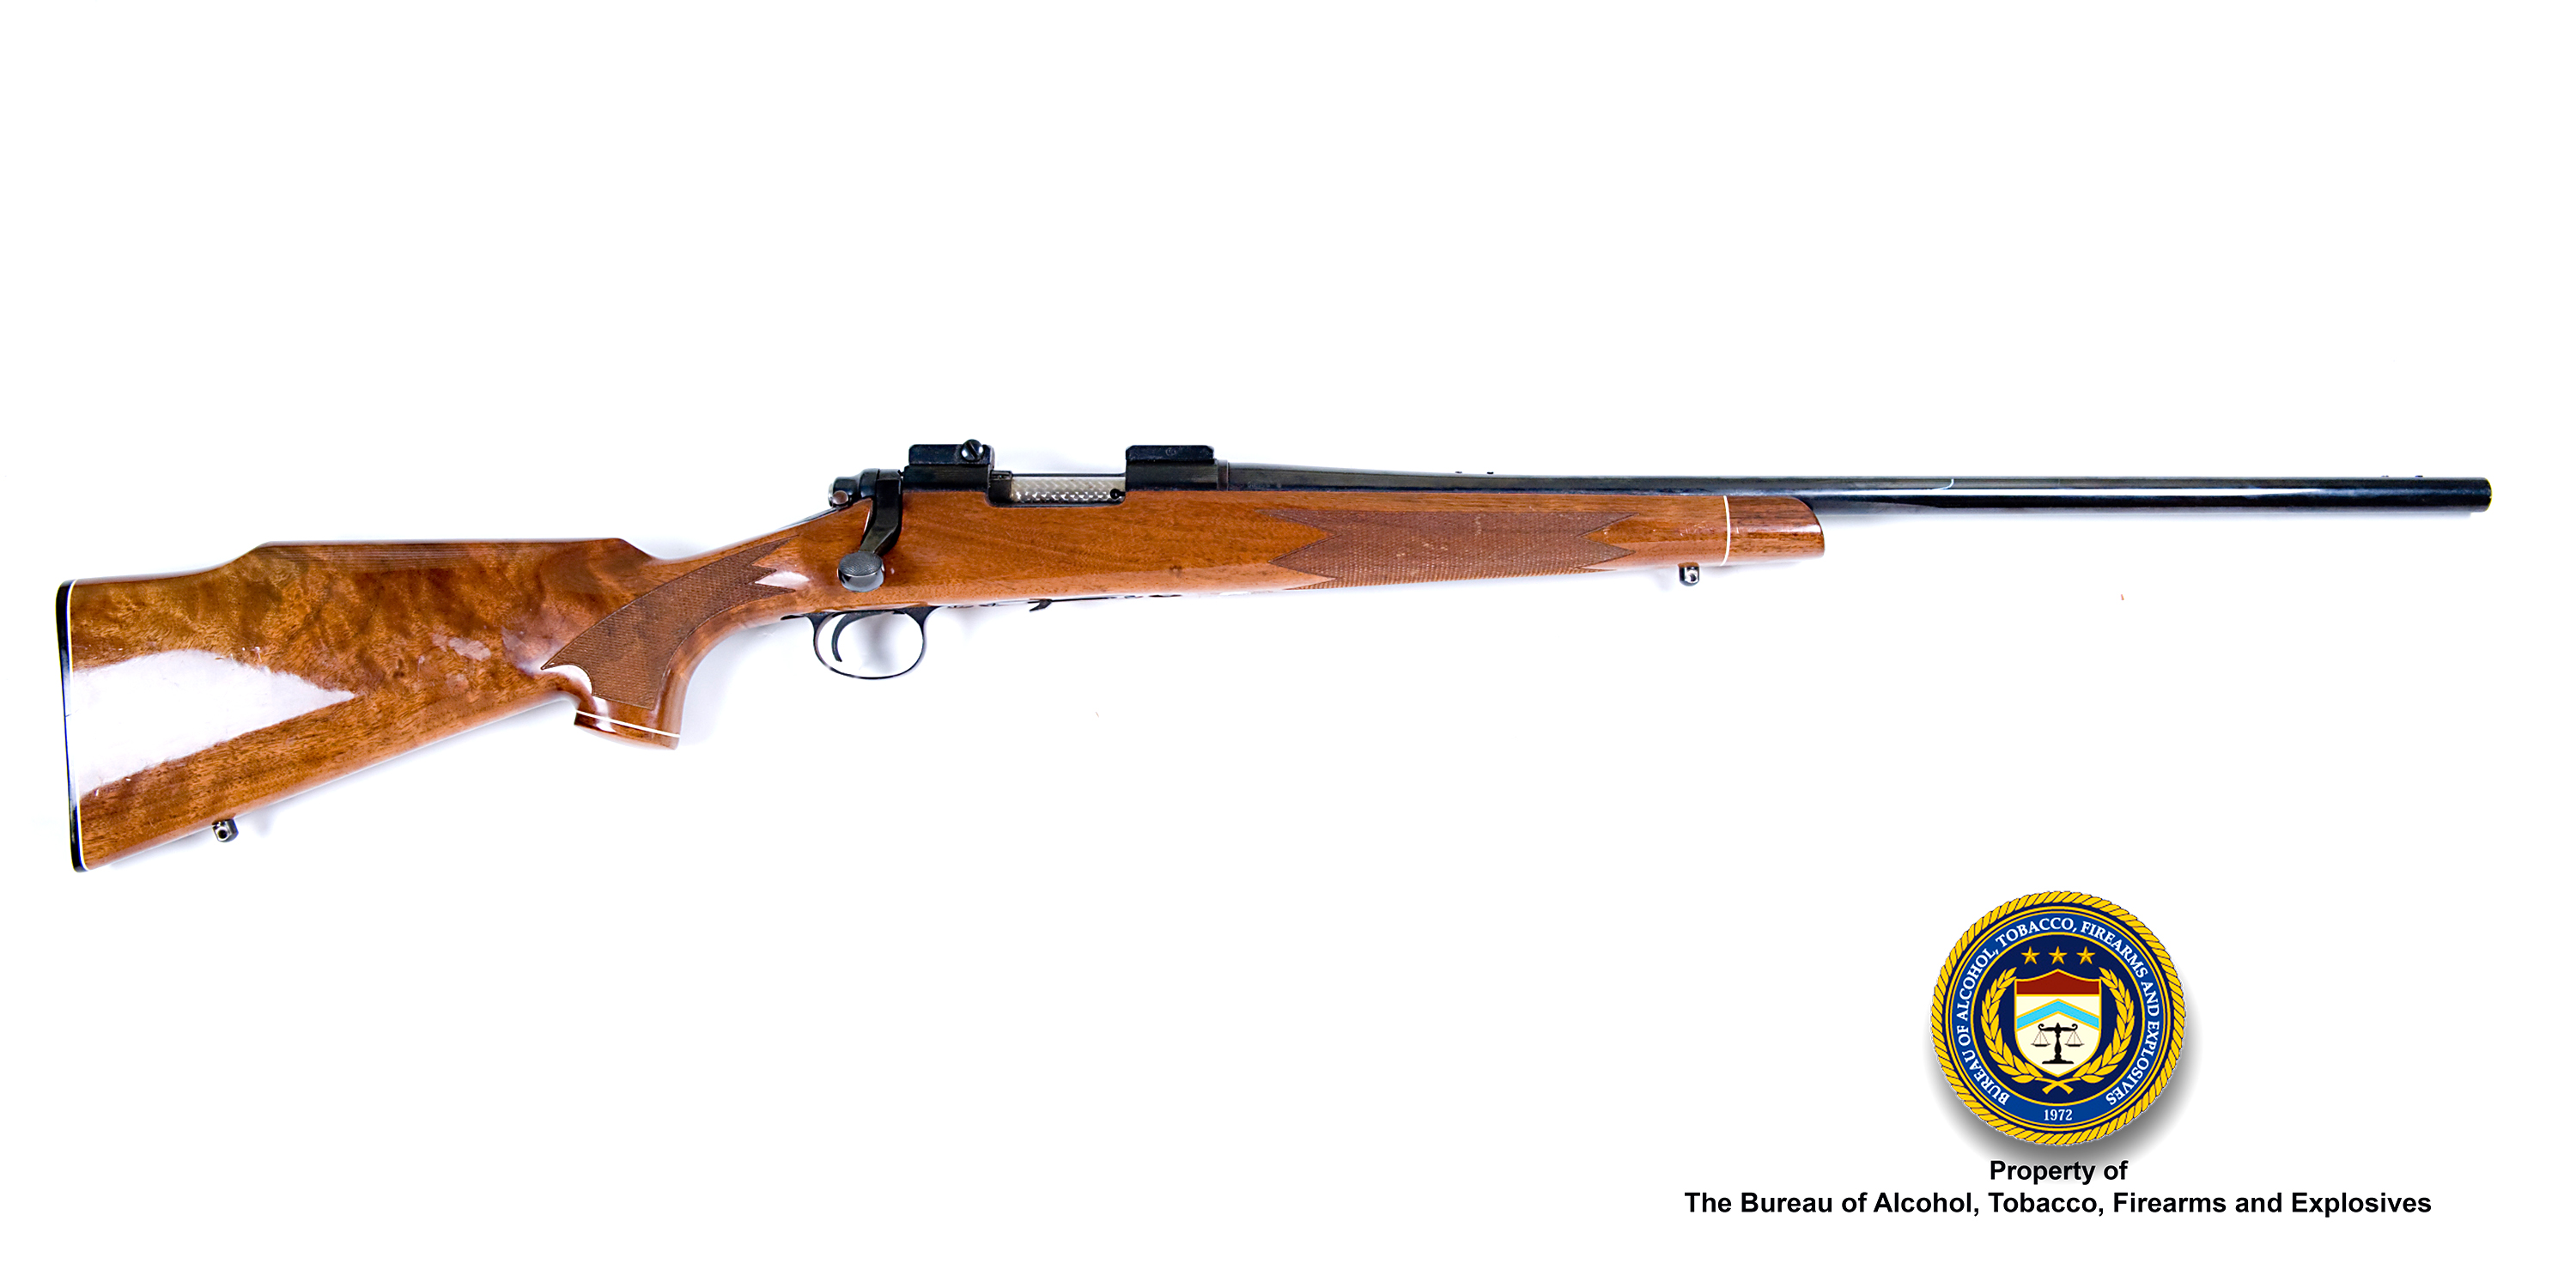 Picture of Remington 40x Make: Remington Model: 40-x Caliber: 22 Long Rifle 